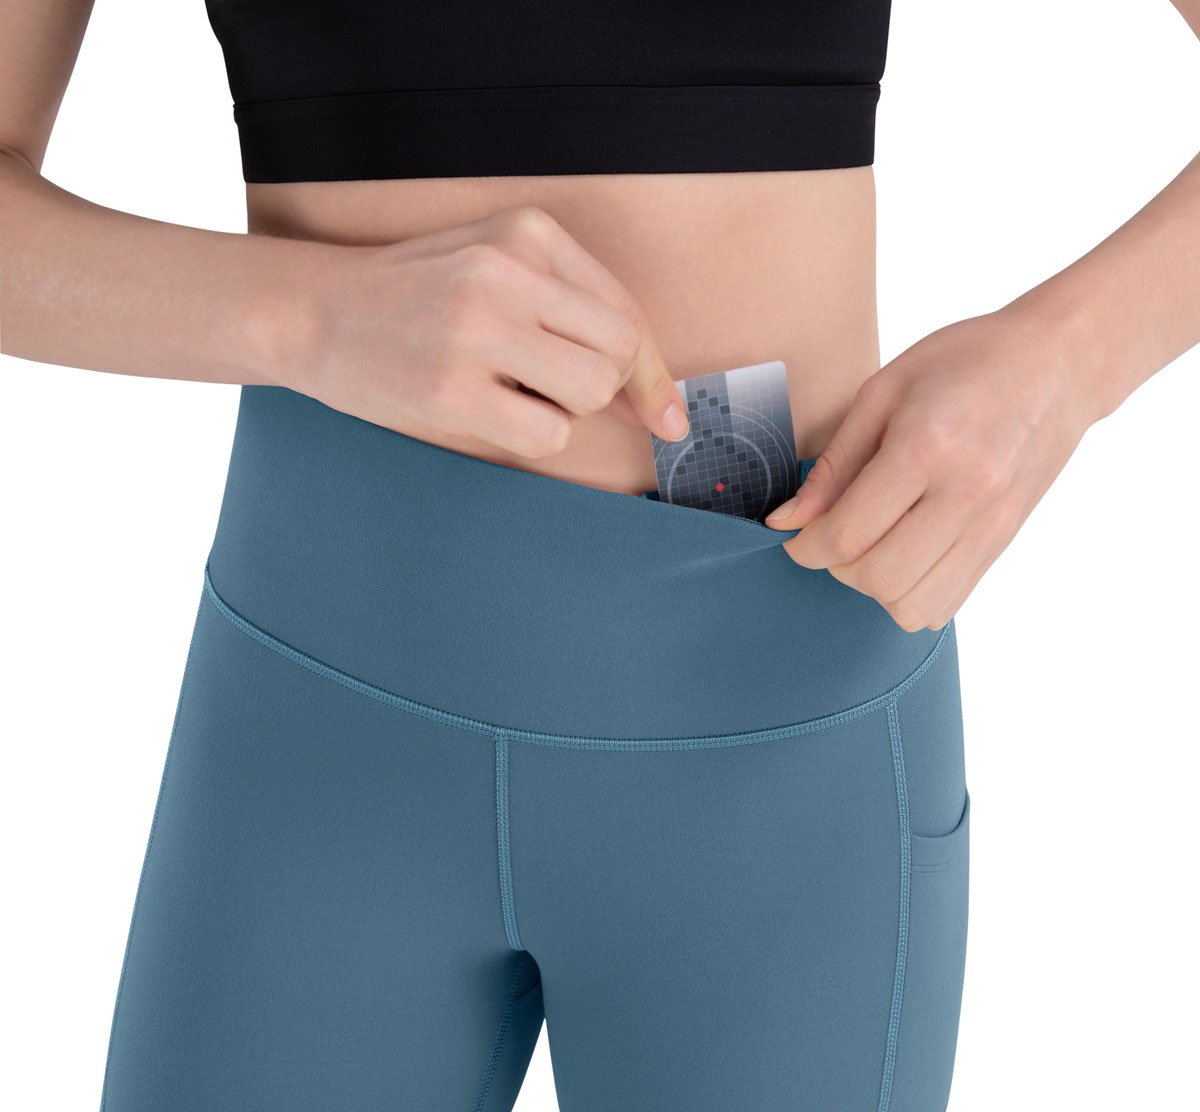 iKeep<sup>&reg;</sup> High Waist Yoga hyperdry Shorts with Pockets | 5''